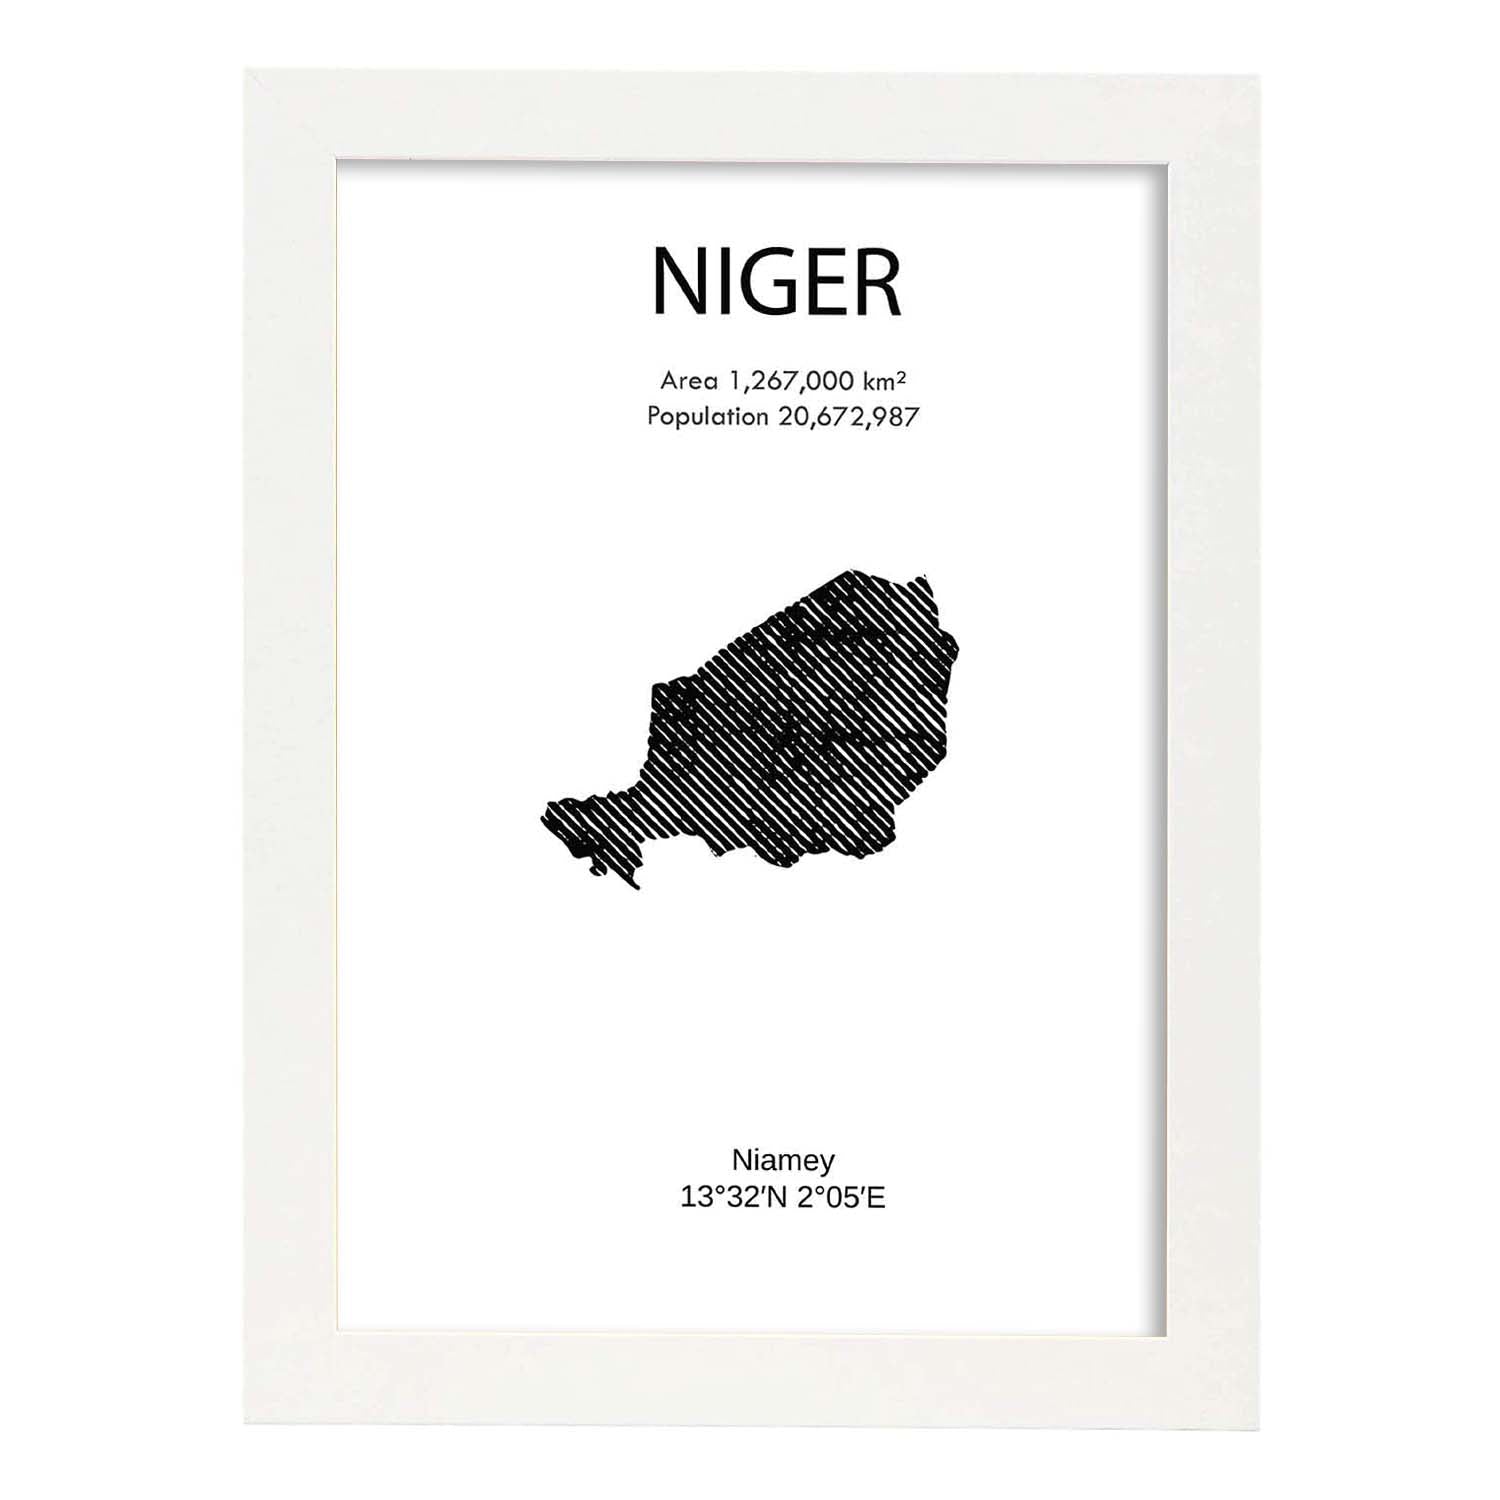 Poster de Niger. Láminas de paises y continentes del mundo.-Artwork-Nacnic-A4-Marco Blanco-Nacnic Estudio SL